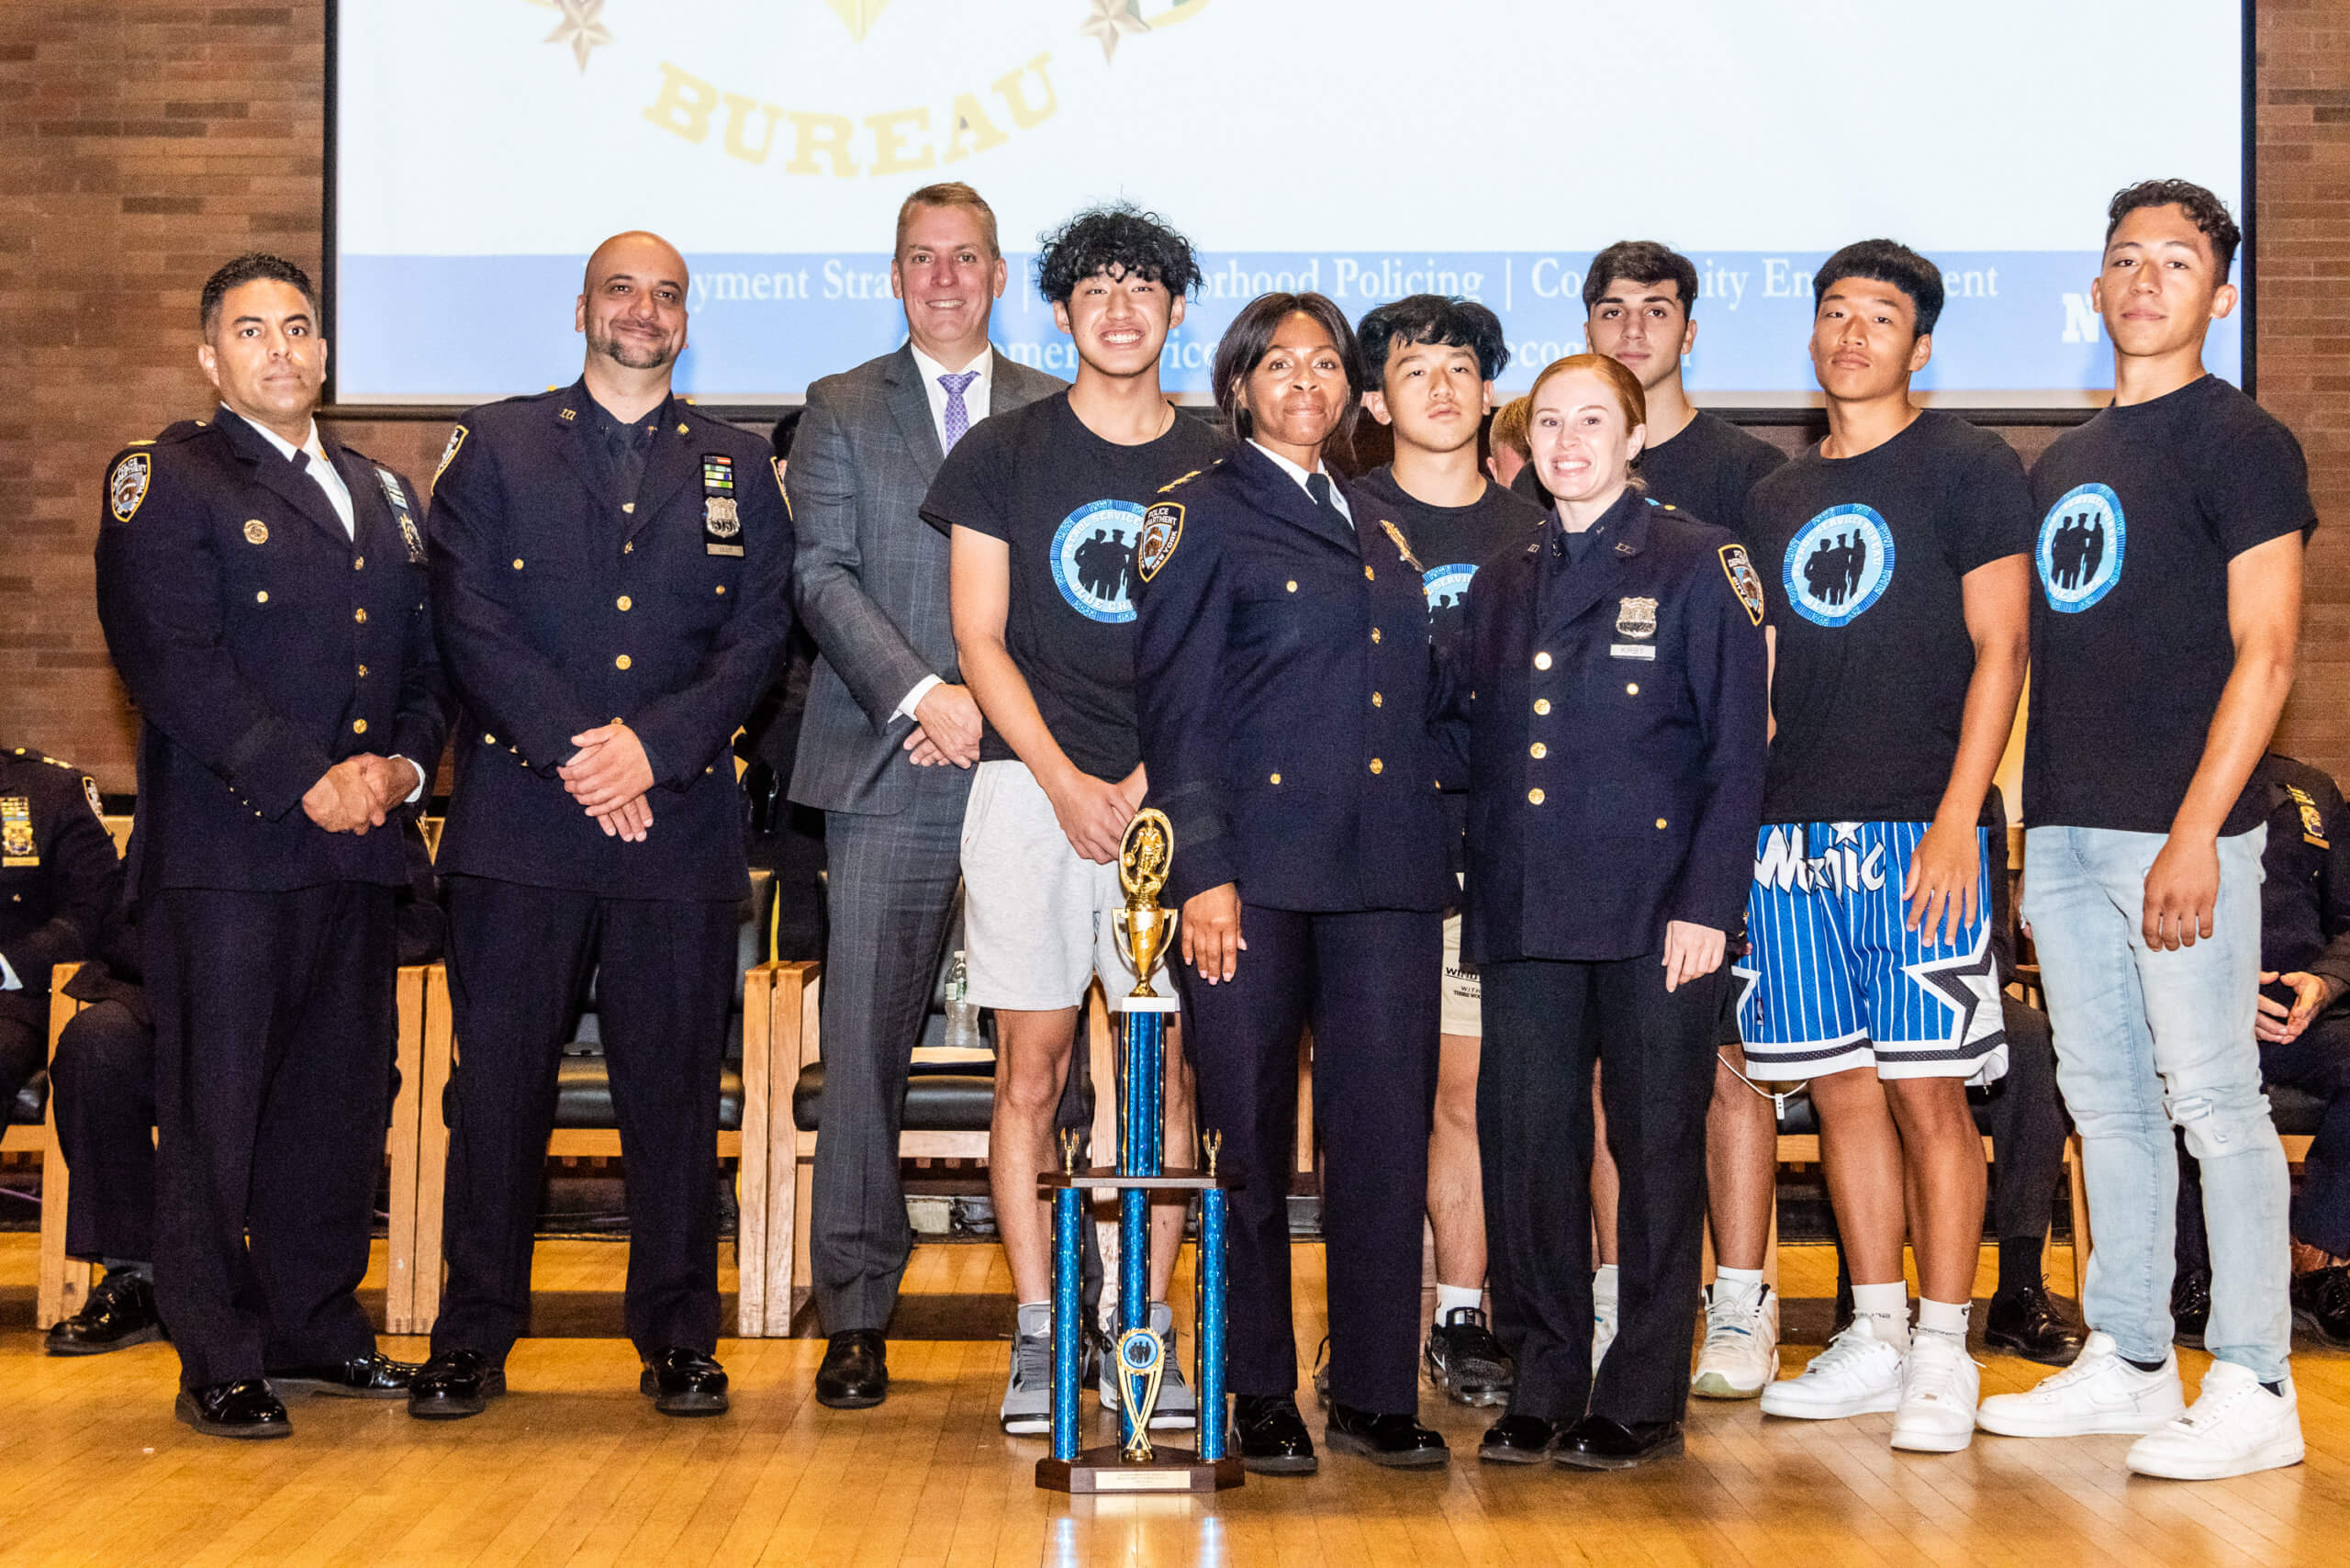 NYPD mentoring program 'Blue Chips' works to build stronger bonds